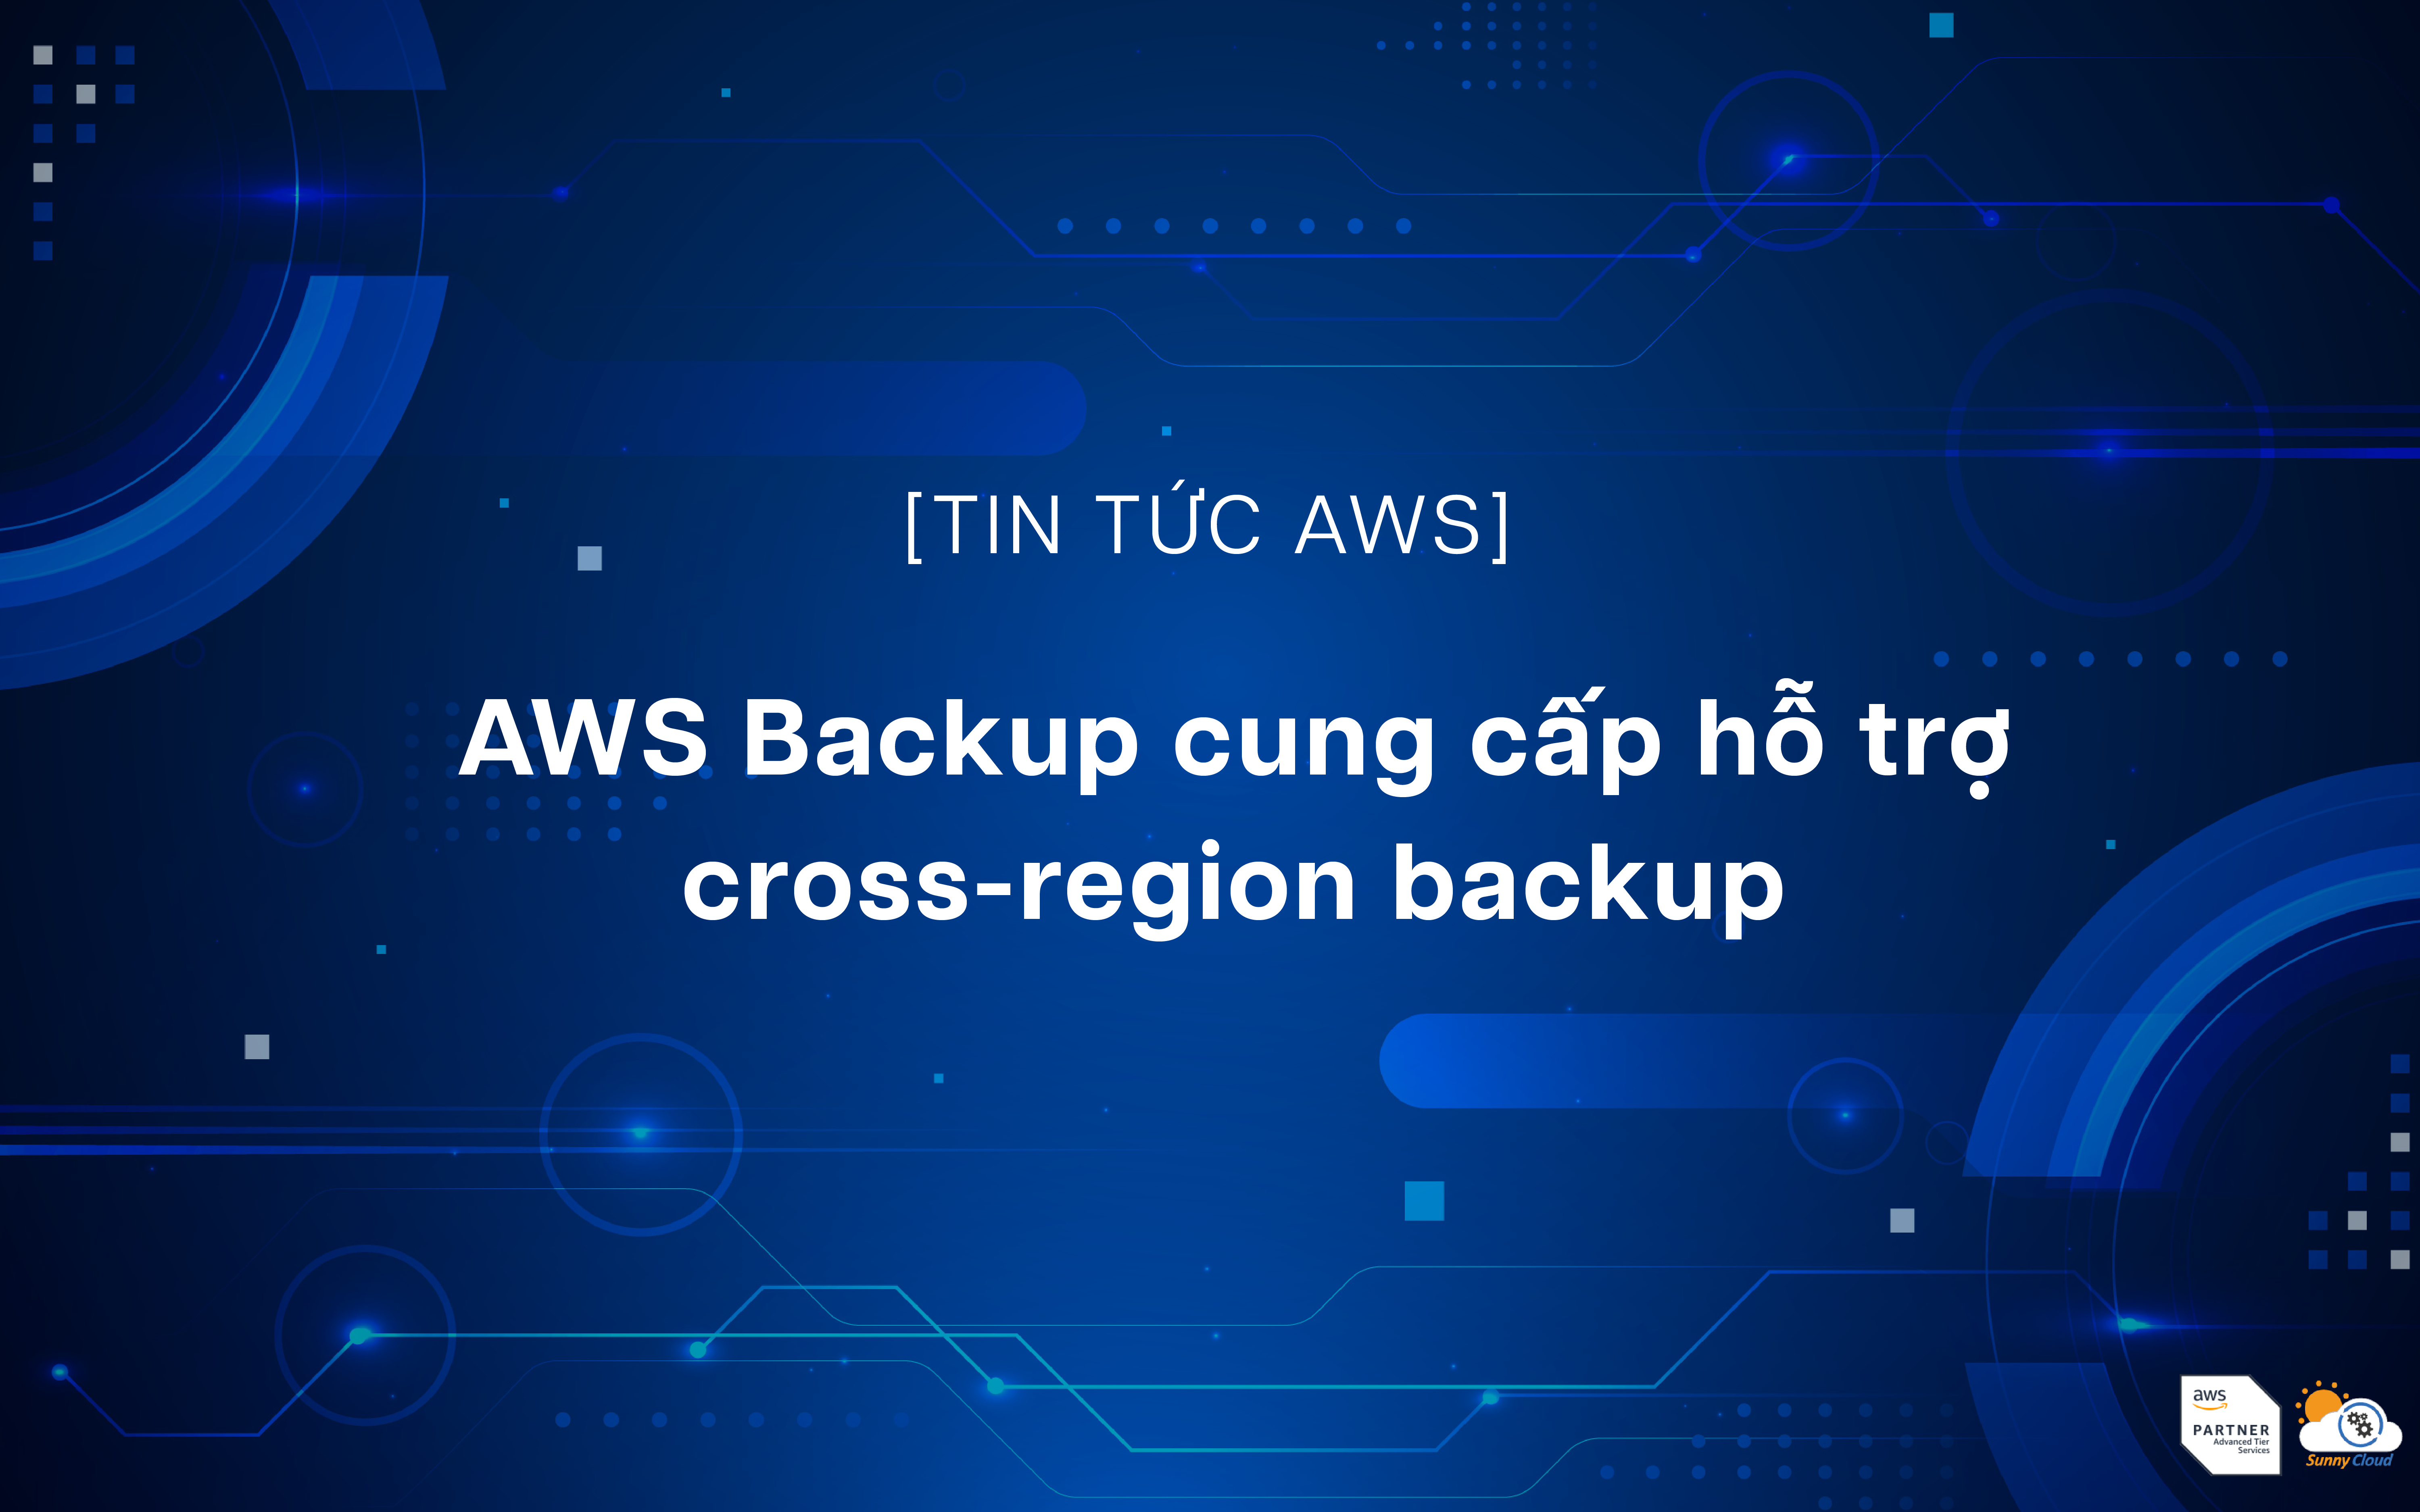 AWS Backup cung cấp hỗ trợ cross-region backup